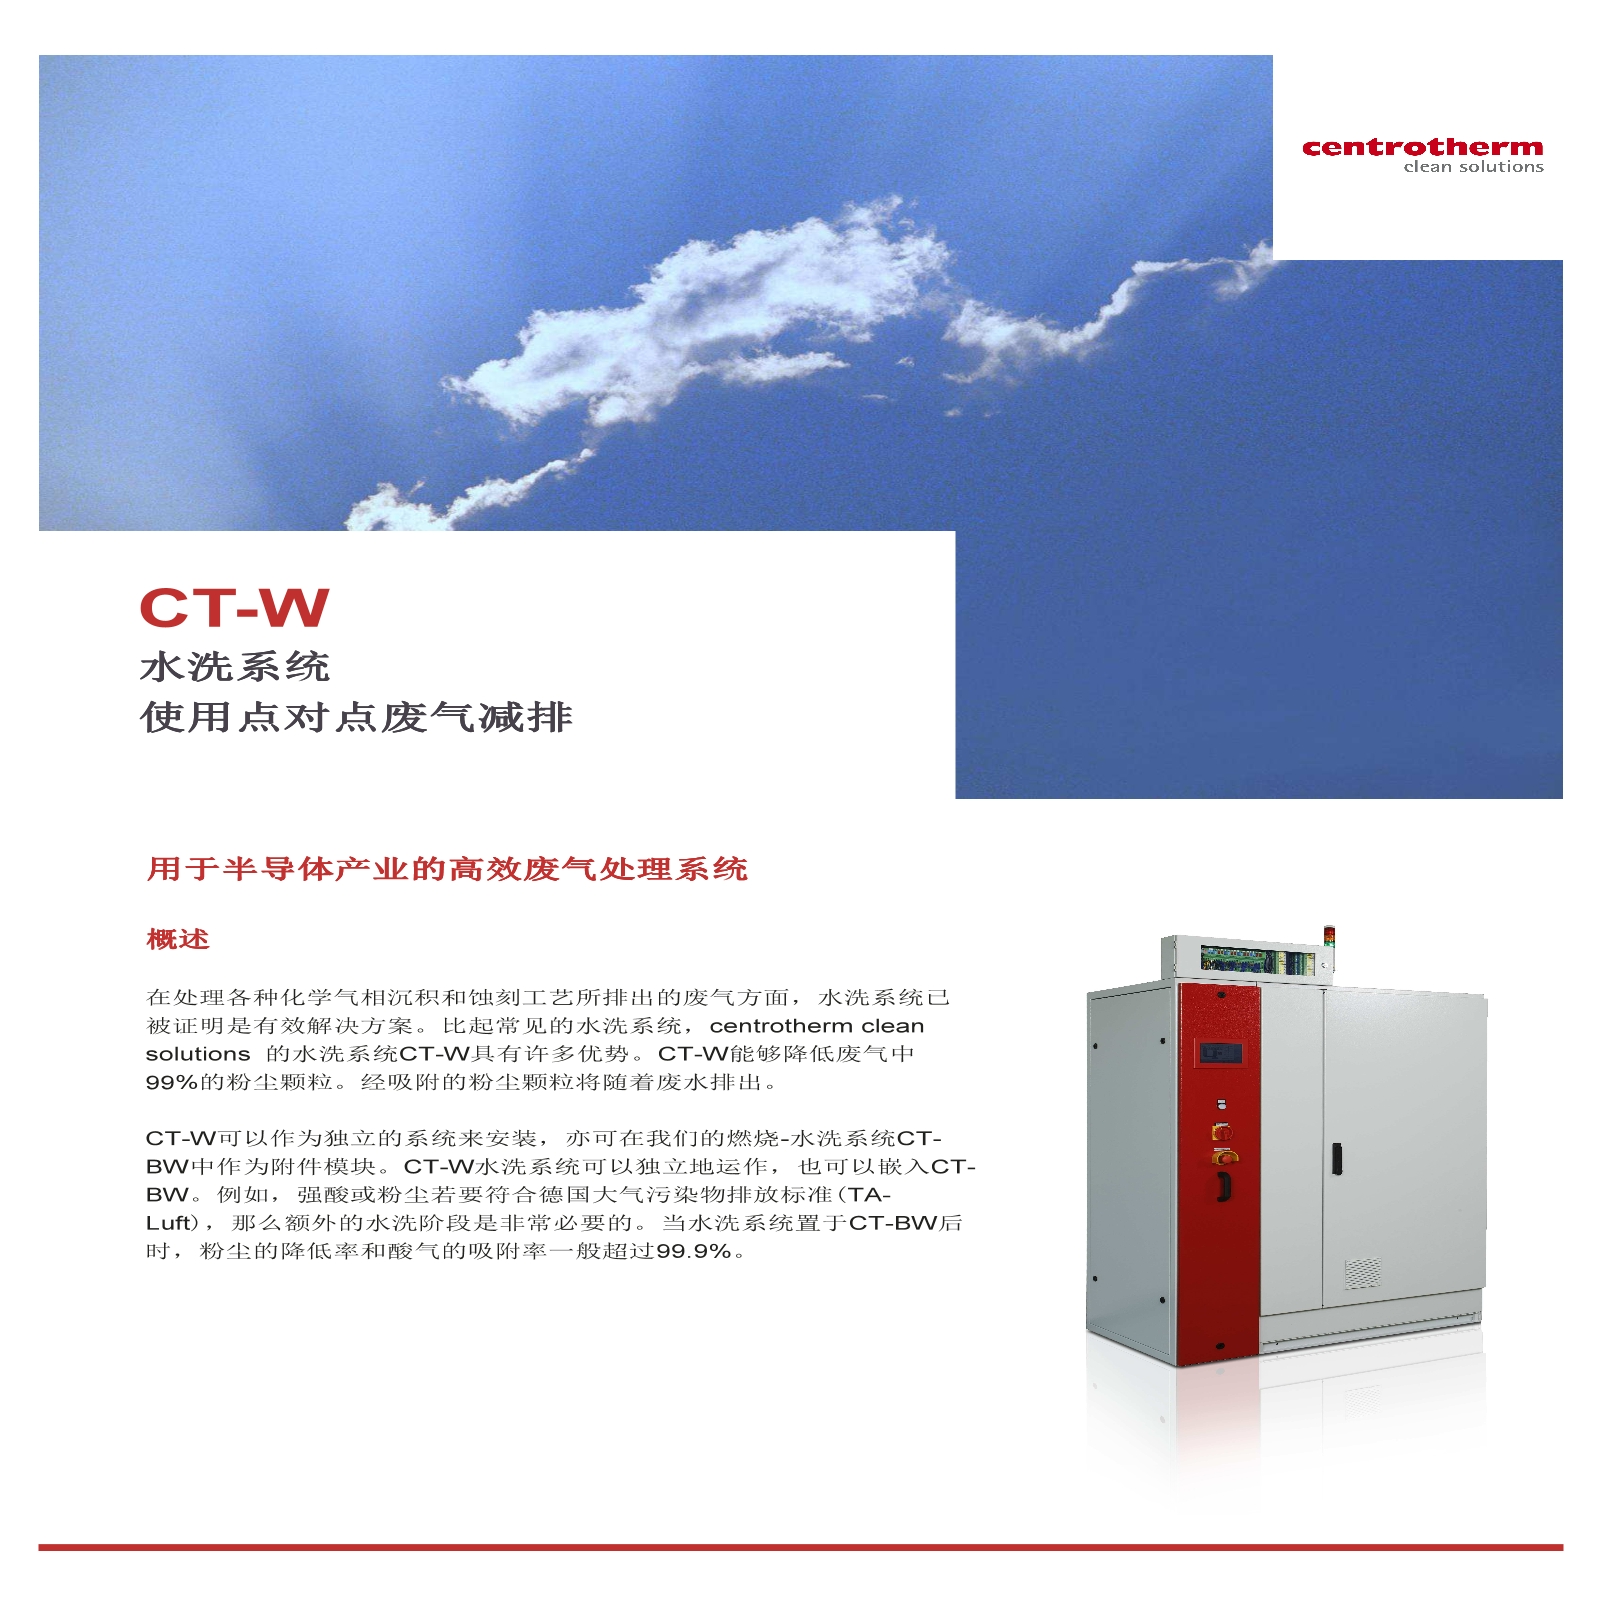 centrotherm-CT-W废气处理设备